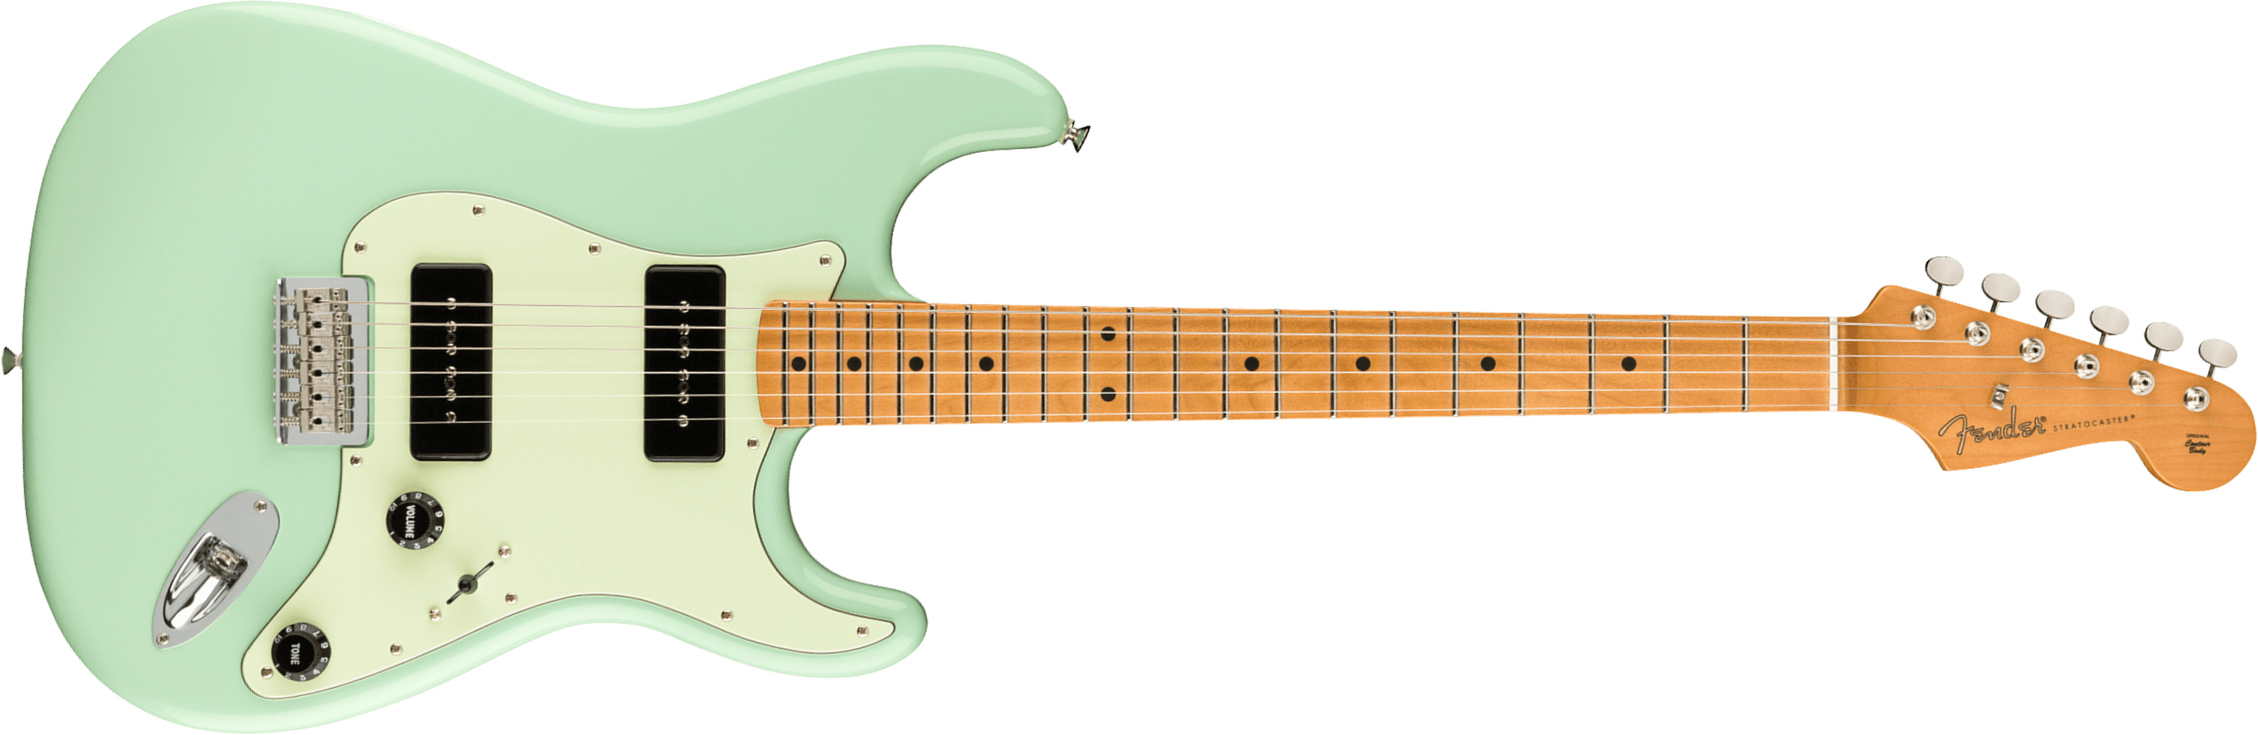 Fender Strat Noventa Mex Ss Ht Mn +housse - Surf Green - Guitare Électrique Forme Str - Main picture